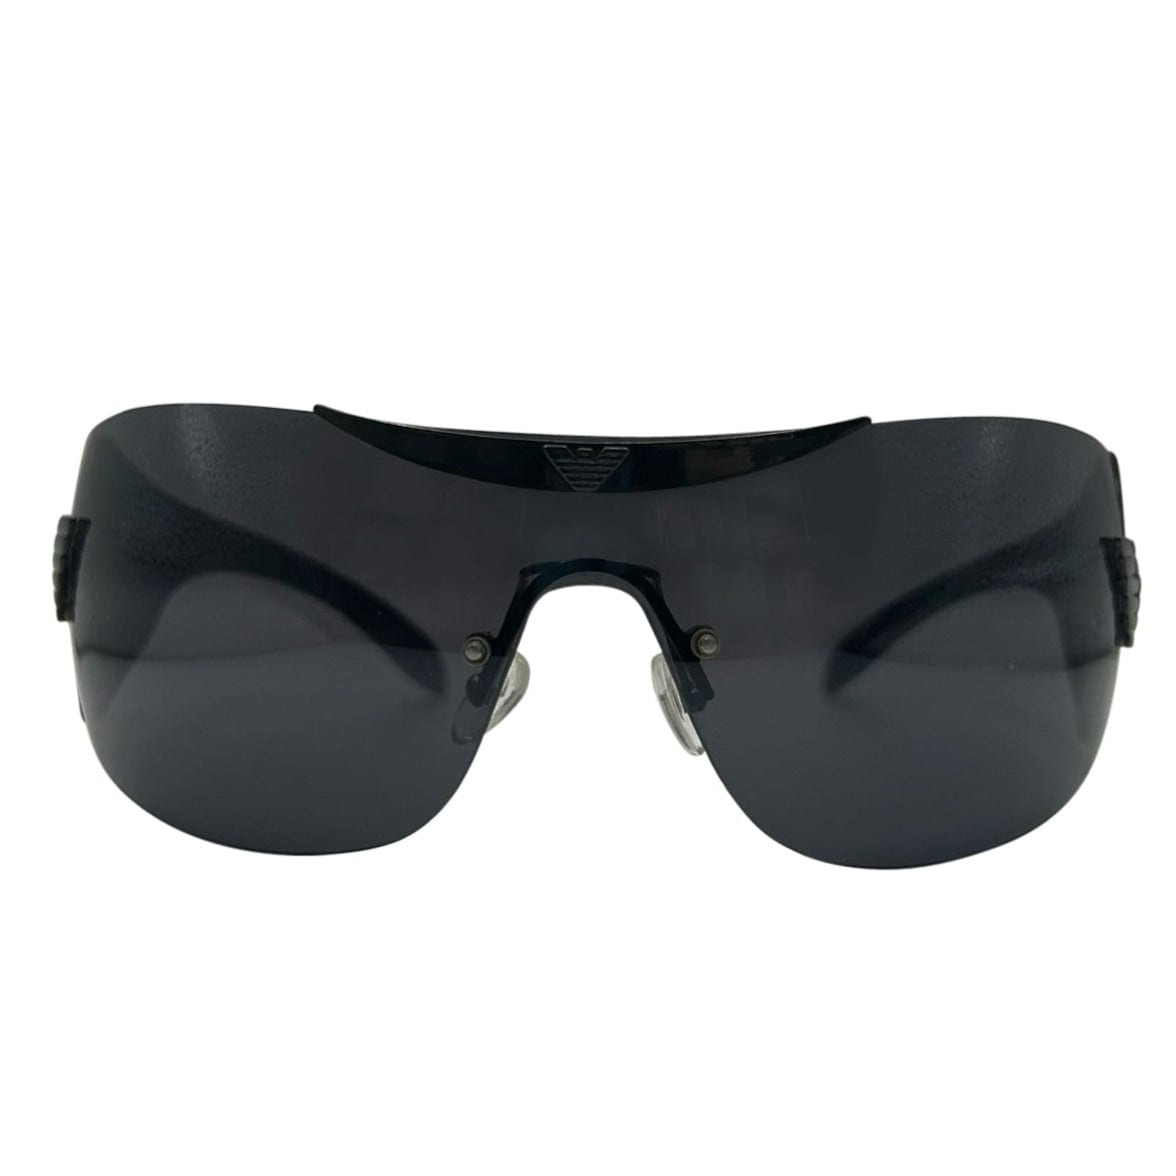 URANUS Shield Sunglasses